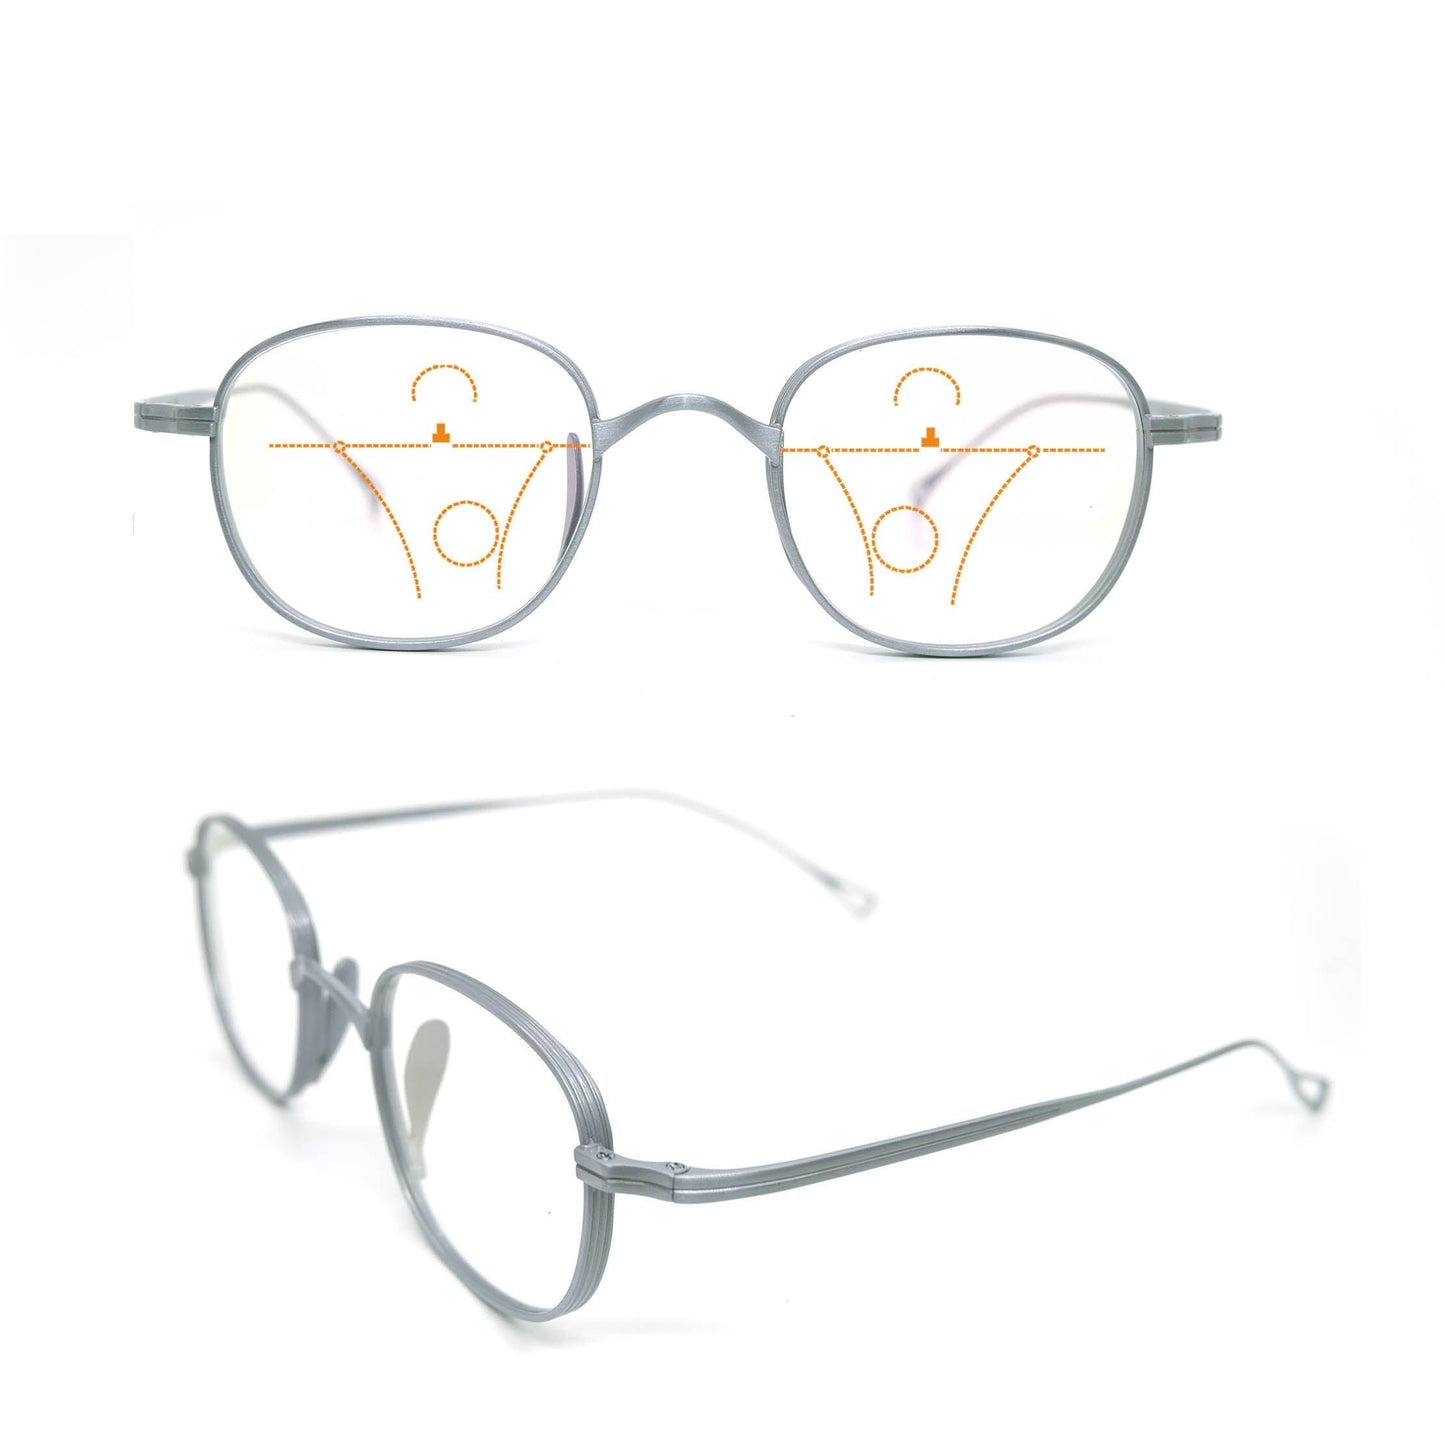 Titanium M 8016C4 round Silver light Progressive Eyeglasses - takeprogressive